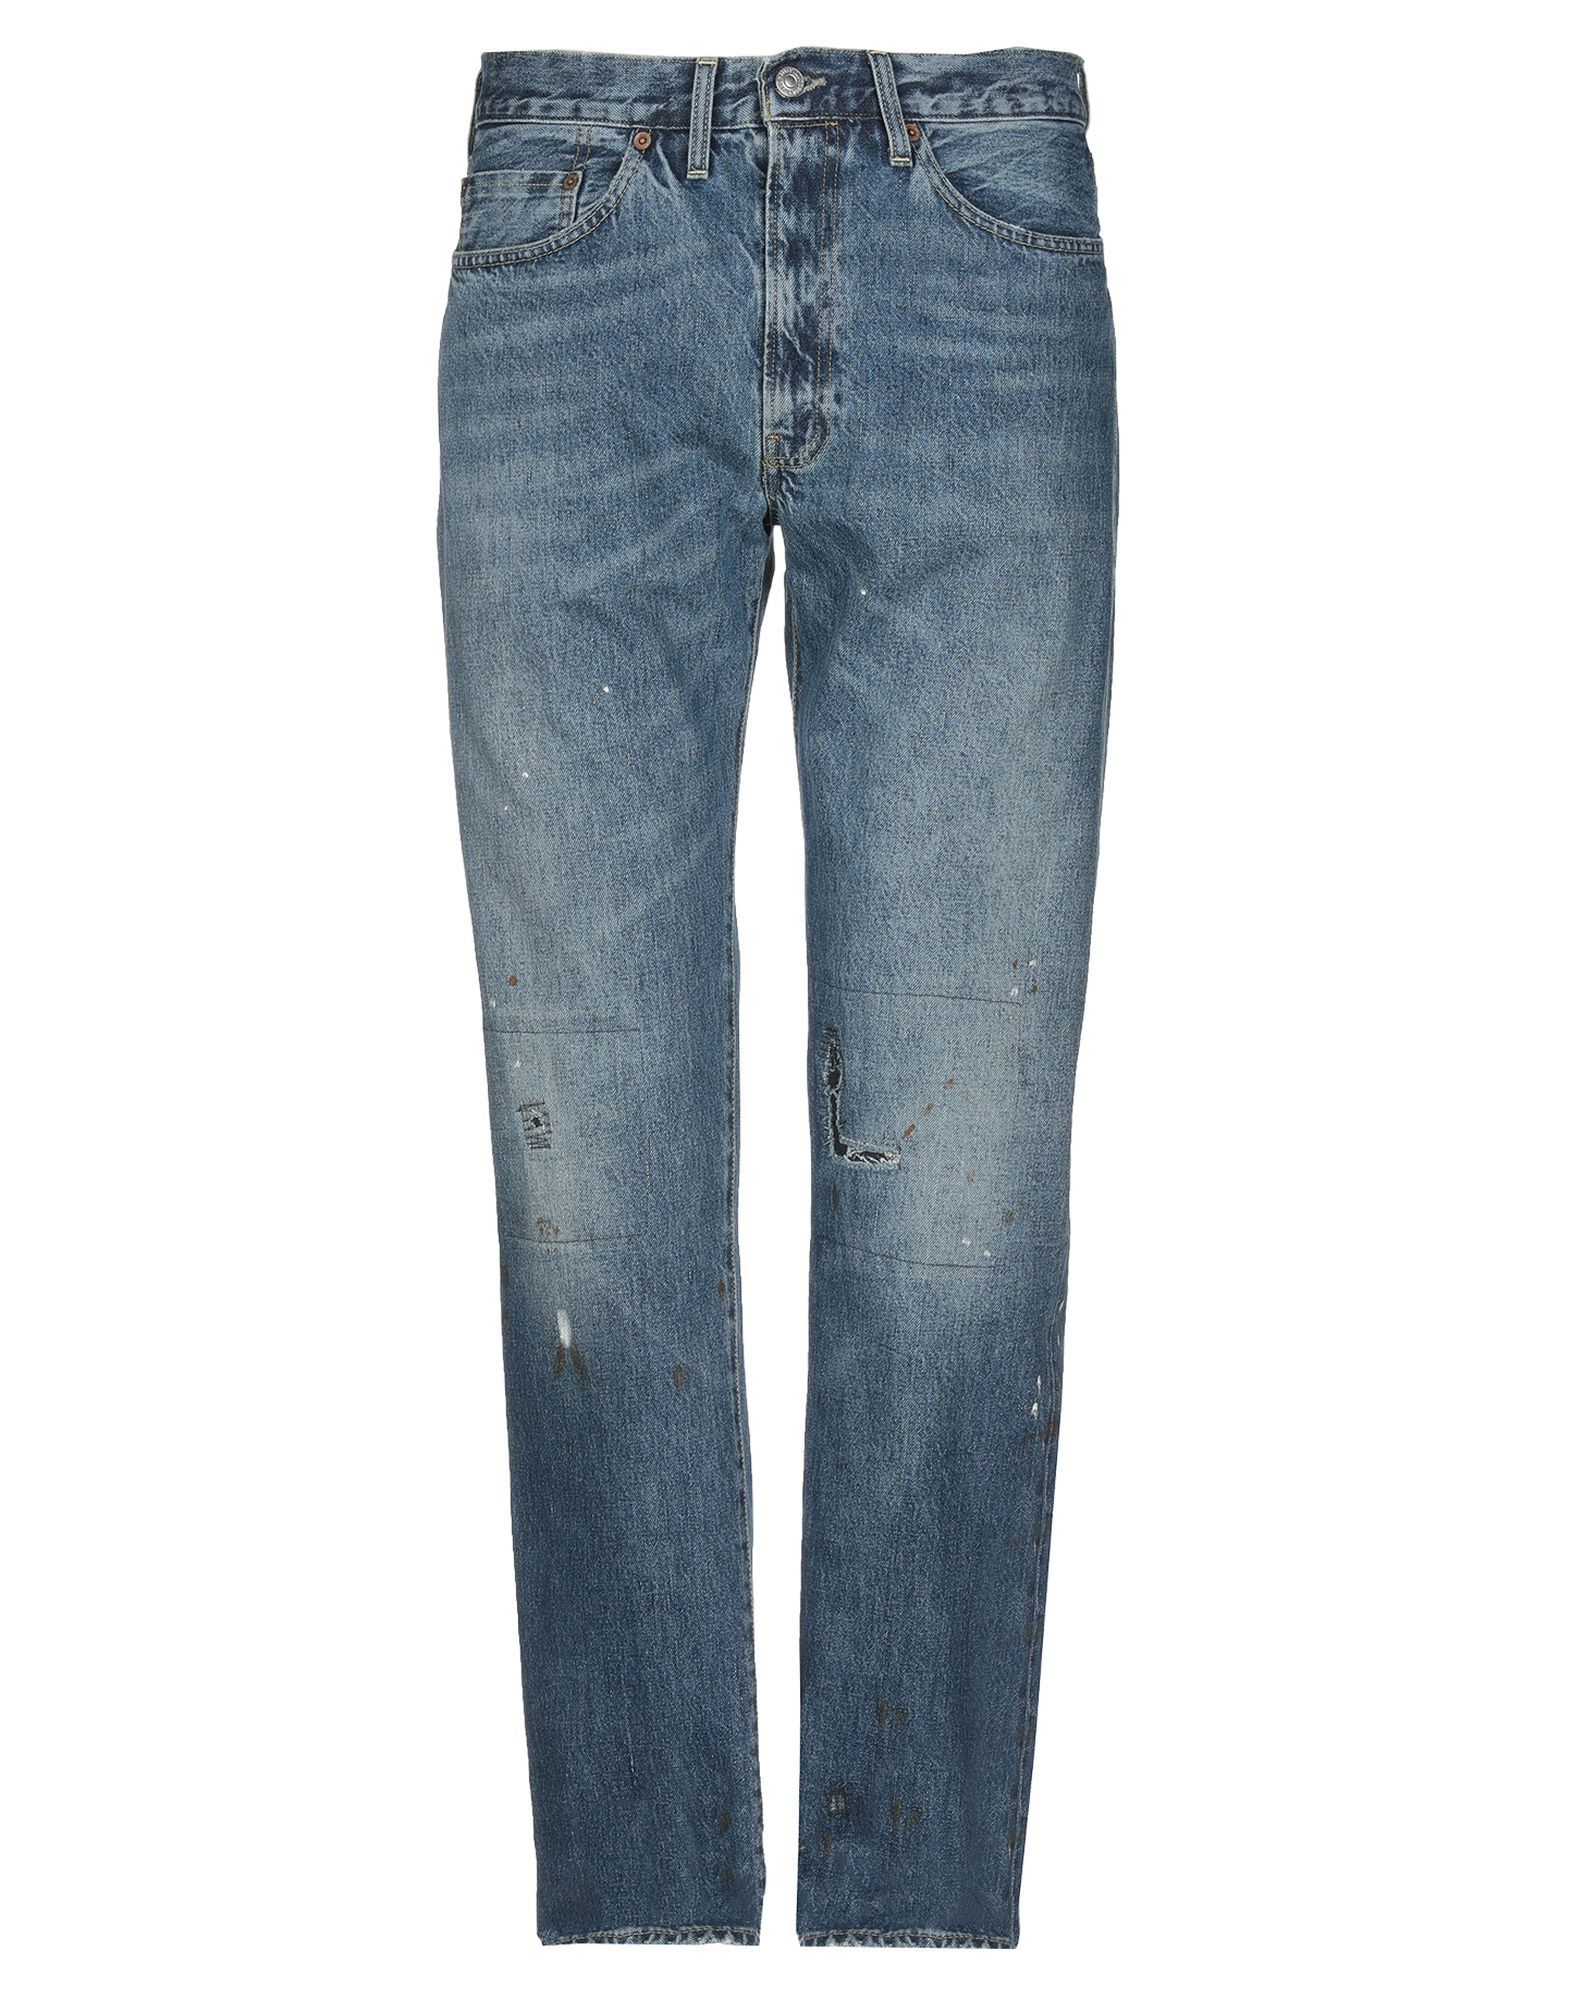 LEVI'S VINTAGE CLOTHING Jeans | YOOX (US)